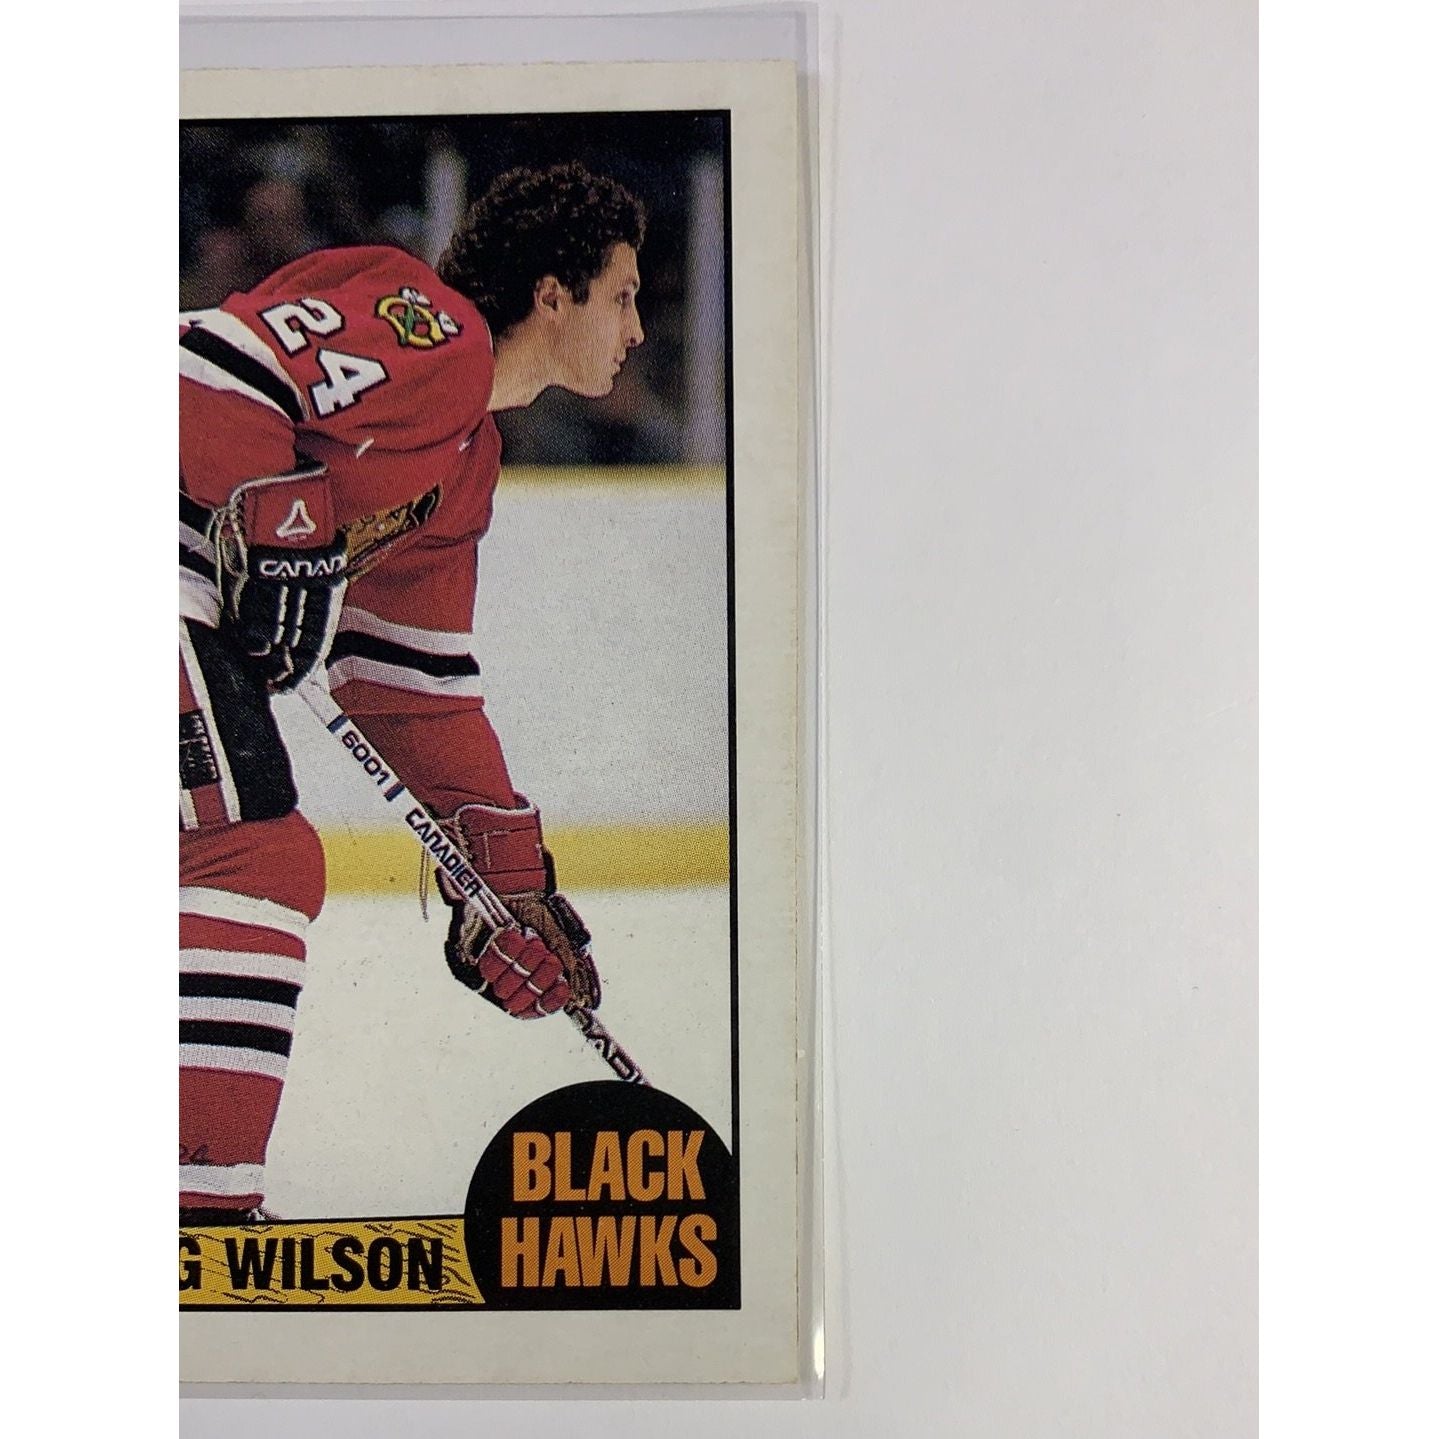  1987-88 O-Pee-Chee Doug Wilson Base #14  Local Legends Cards & Collectibles